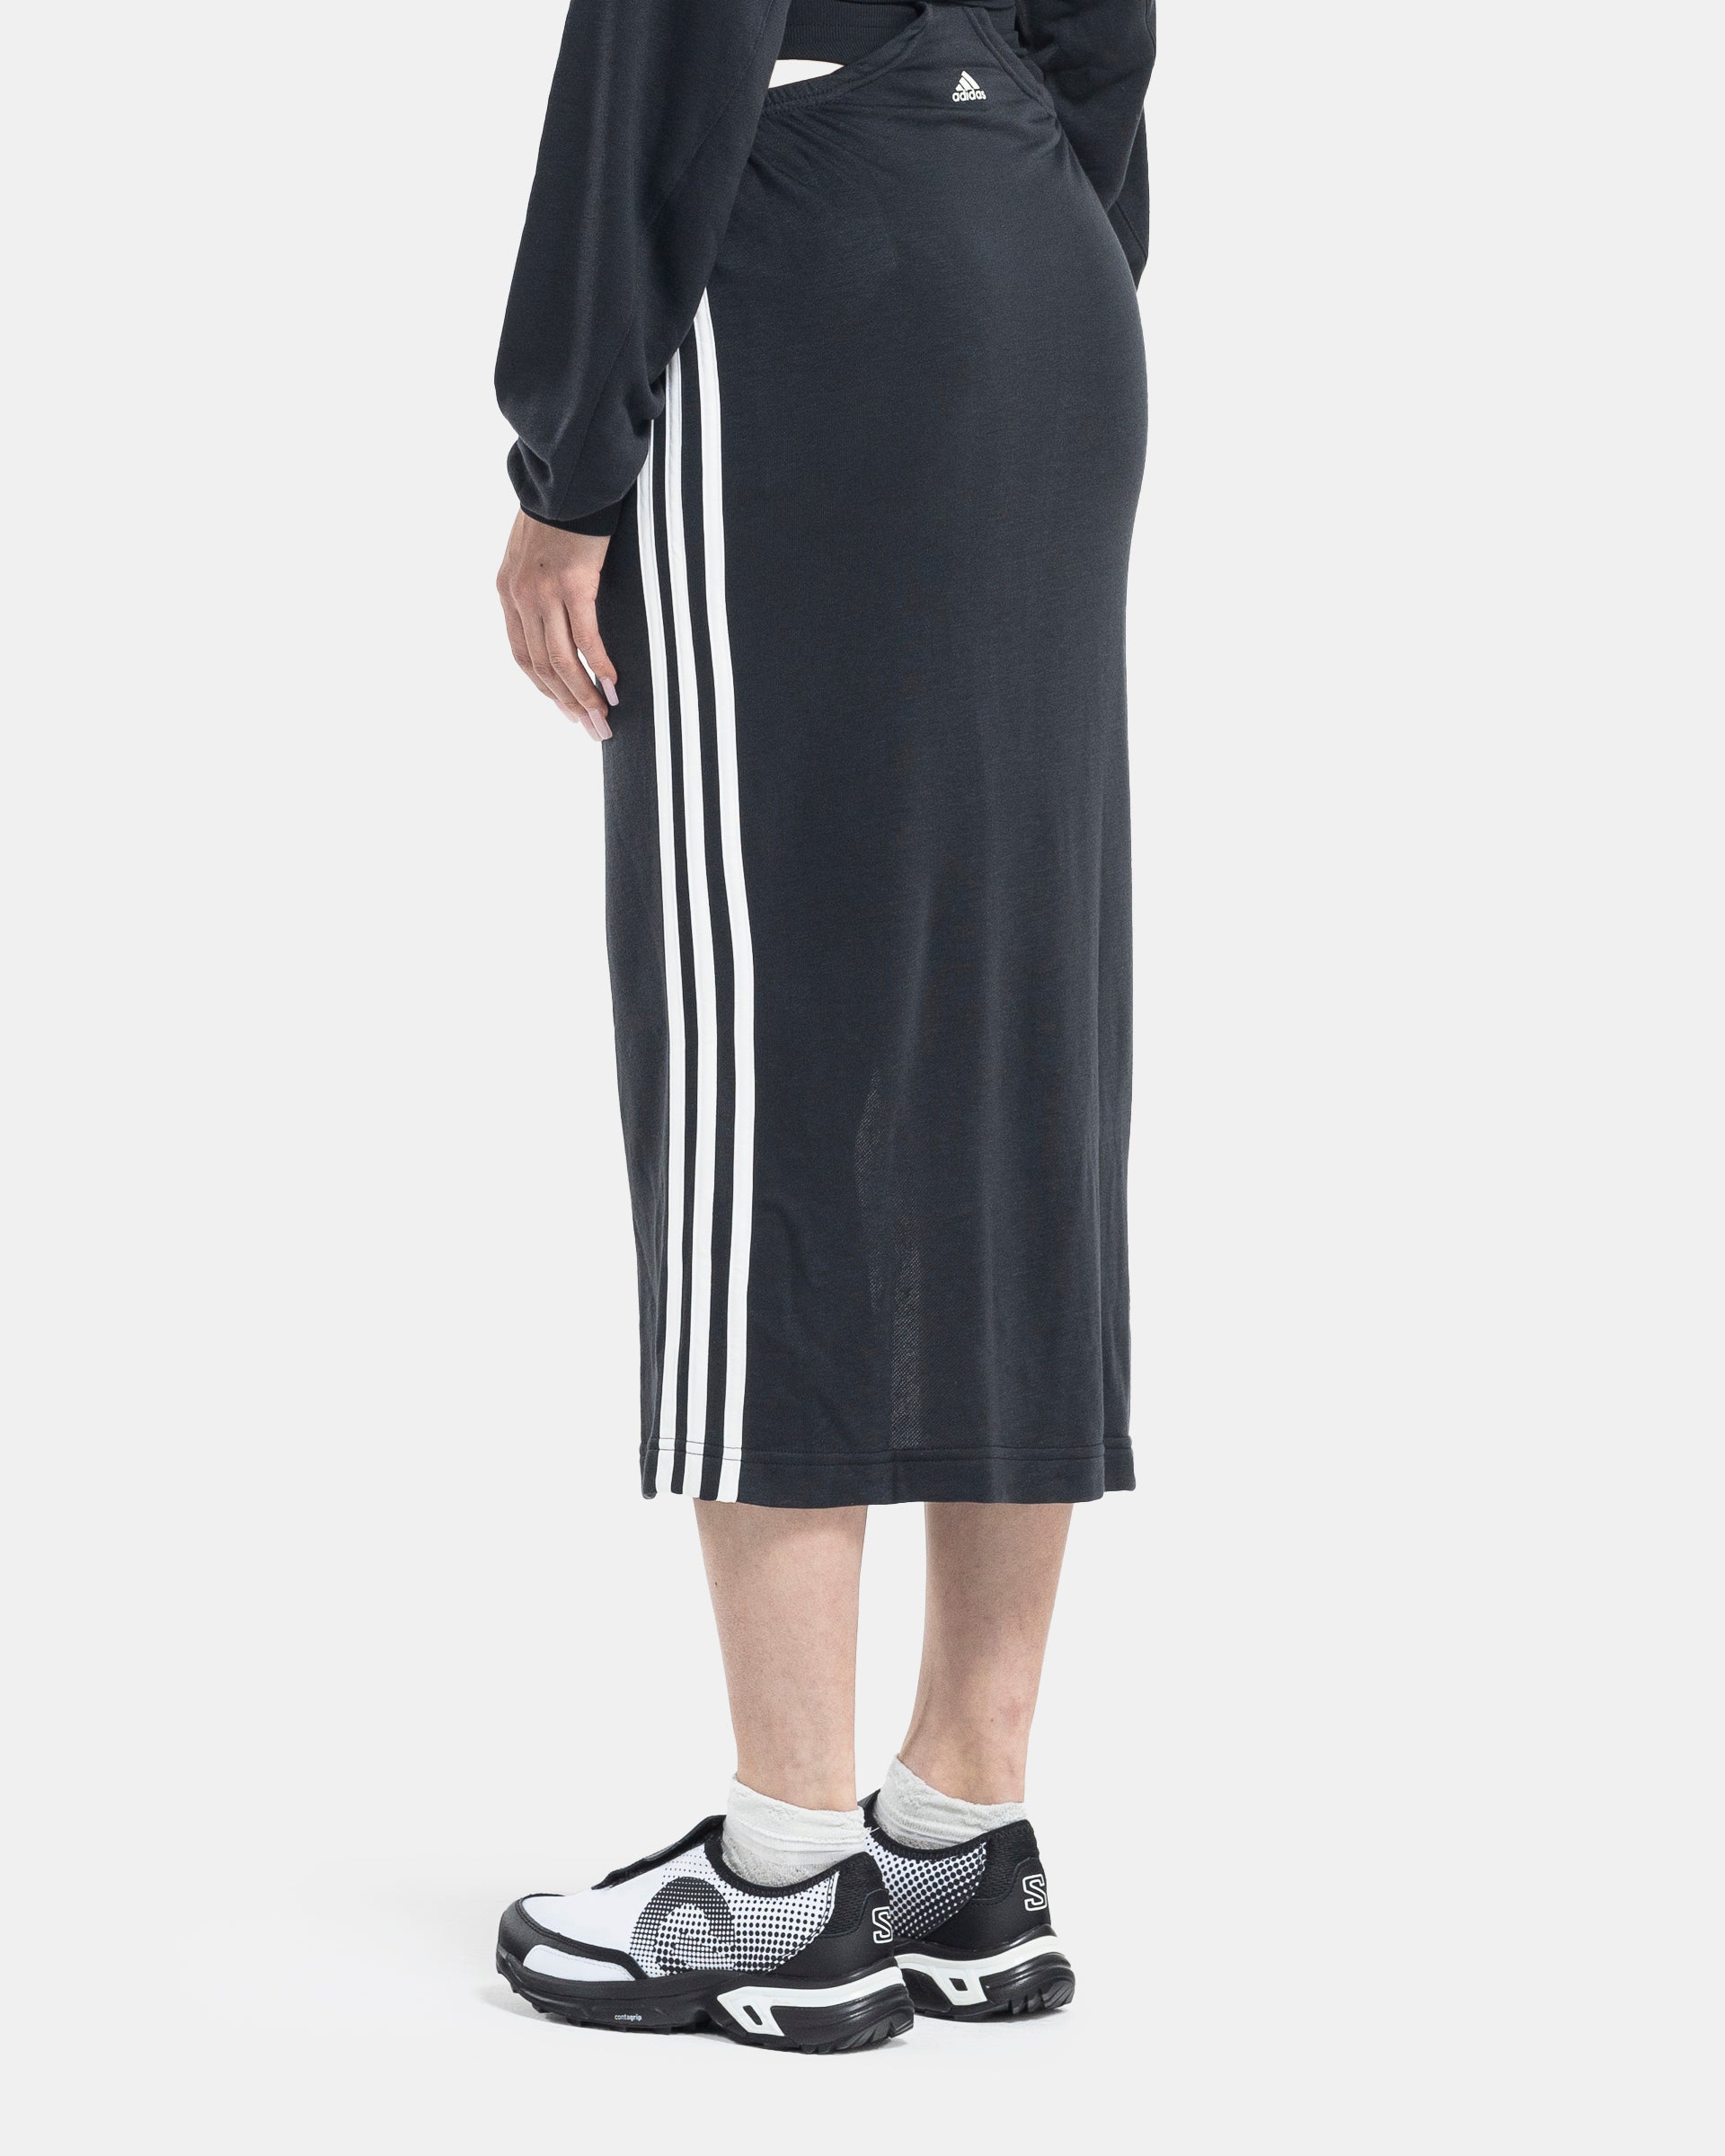 Female model wearing RUI x Adidas Black Skirt on white background